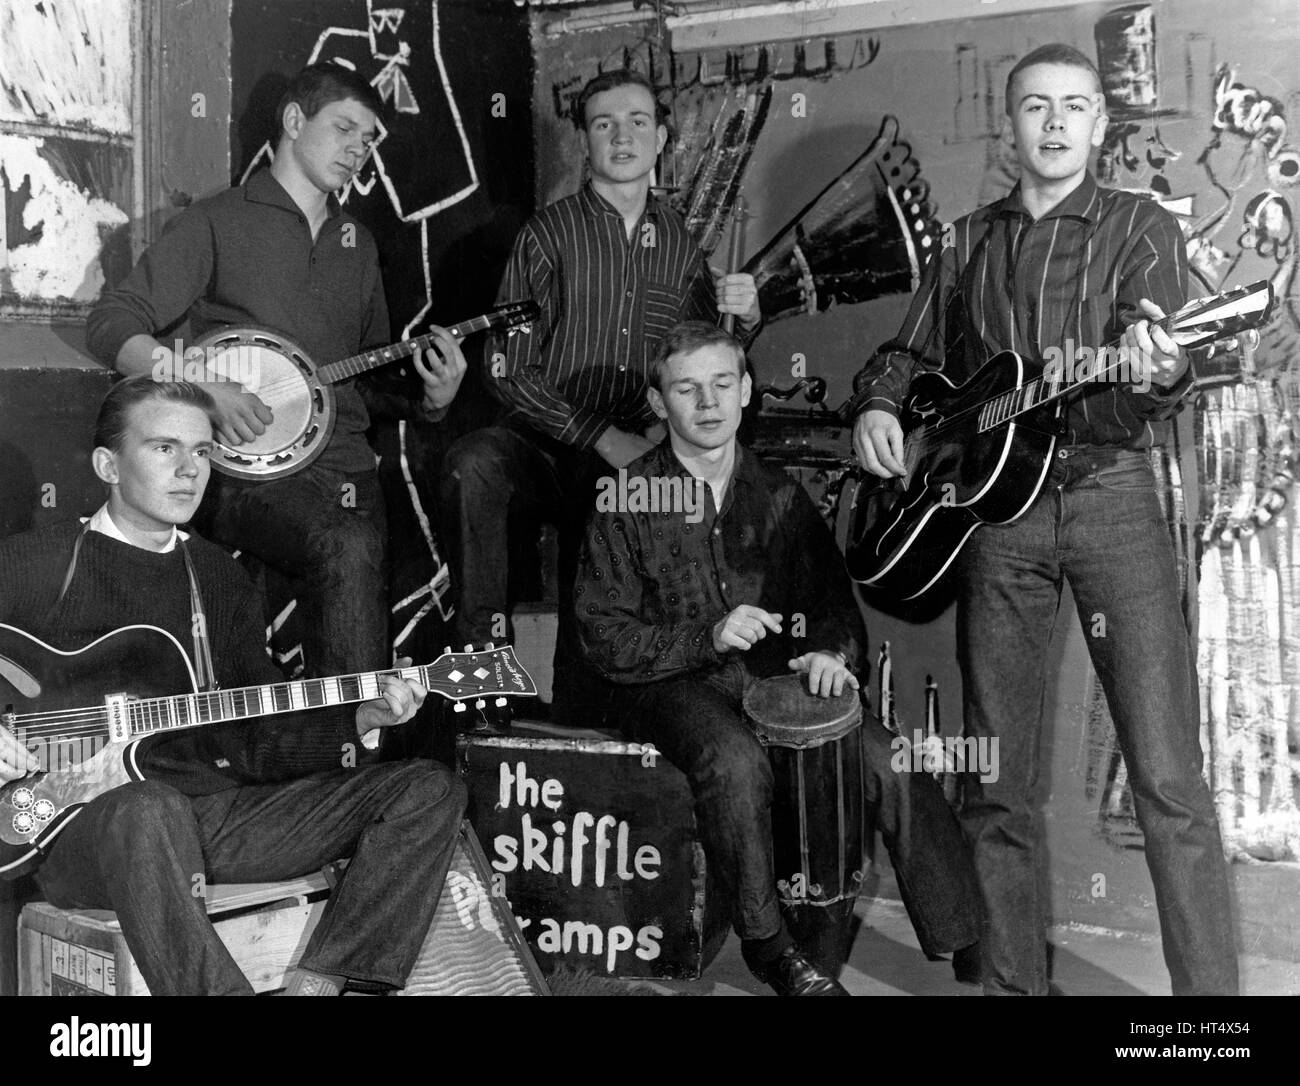 Die Skiffleband 'The Skiffle Tramps' in Hamburg, Deutschland 1960er Jahre. The skiffle band 'The Skiffle Tramps' performing at Hamburg, Germany 1960s. Stock Photo